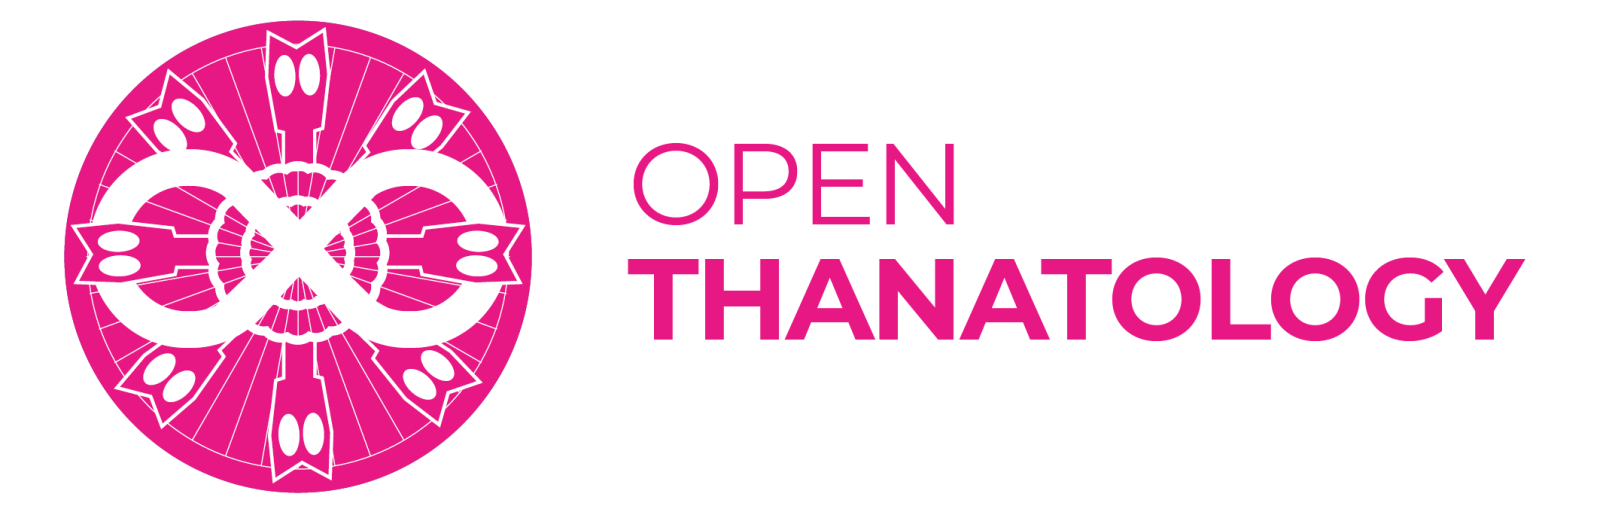 Open Thanatology logo